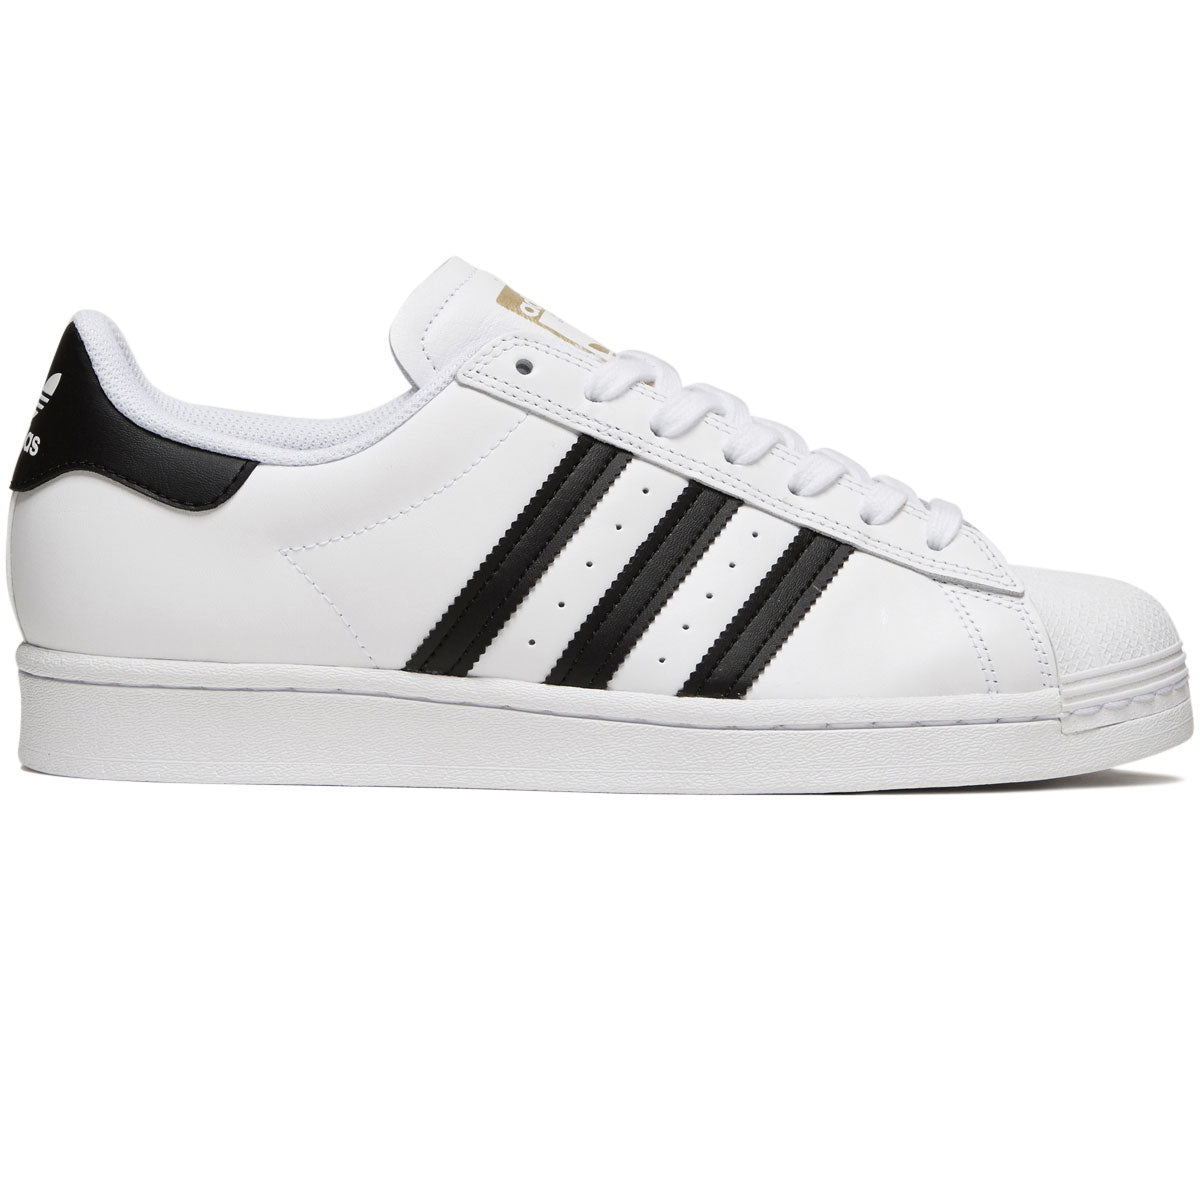 Adidas Superstar Adv Shoes - White/Core Black/White image 1